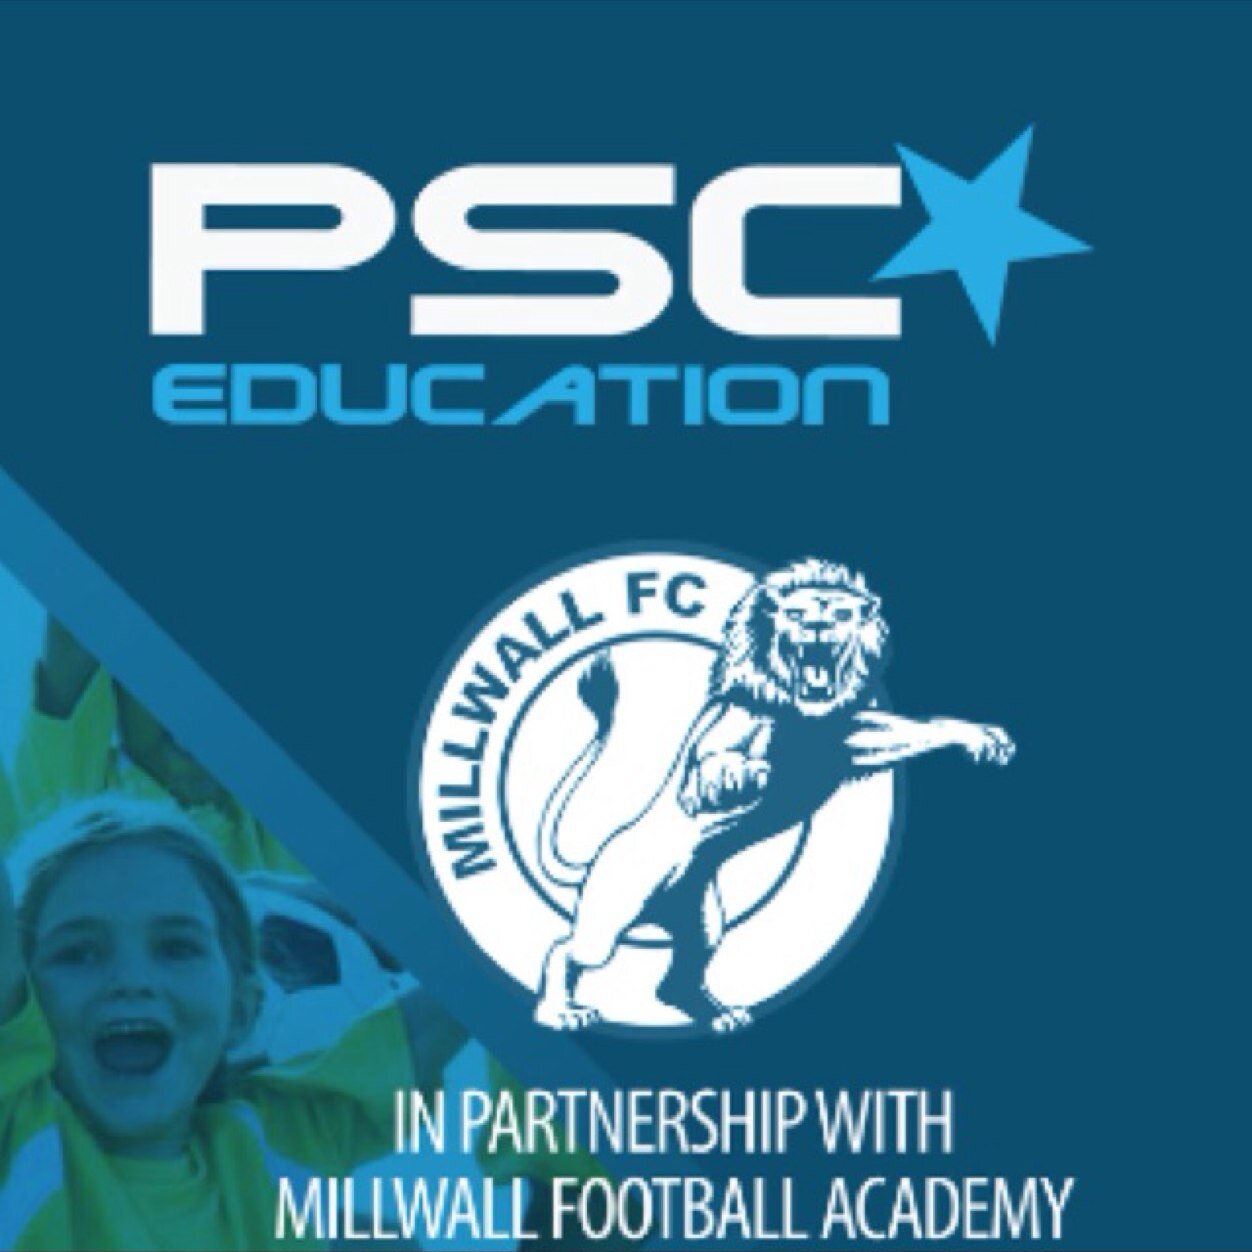 PSC & Education